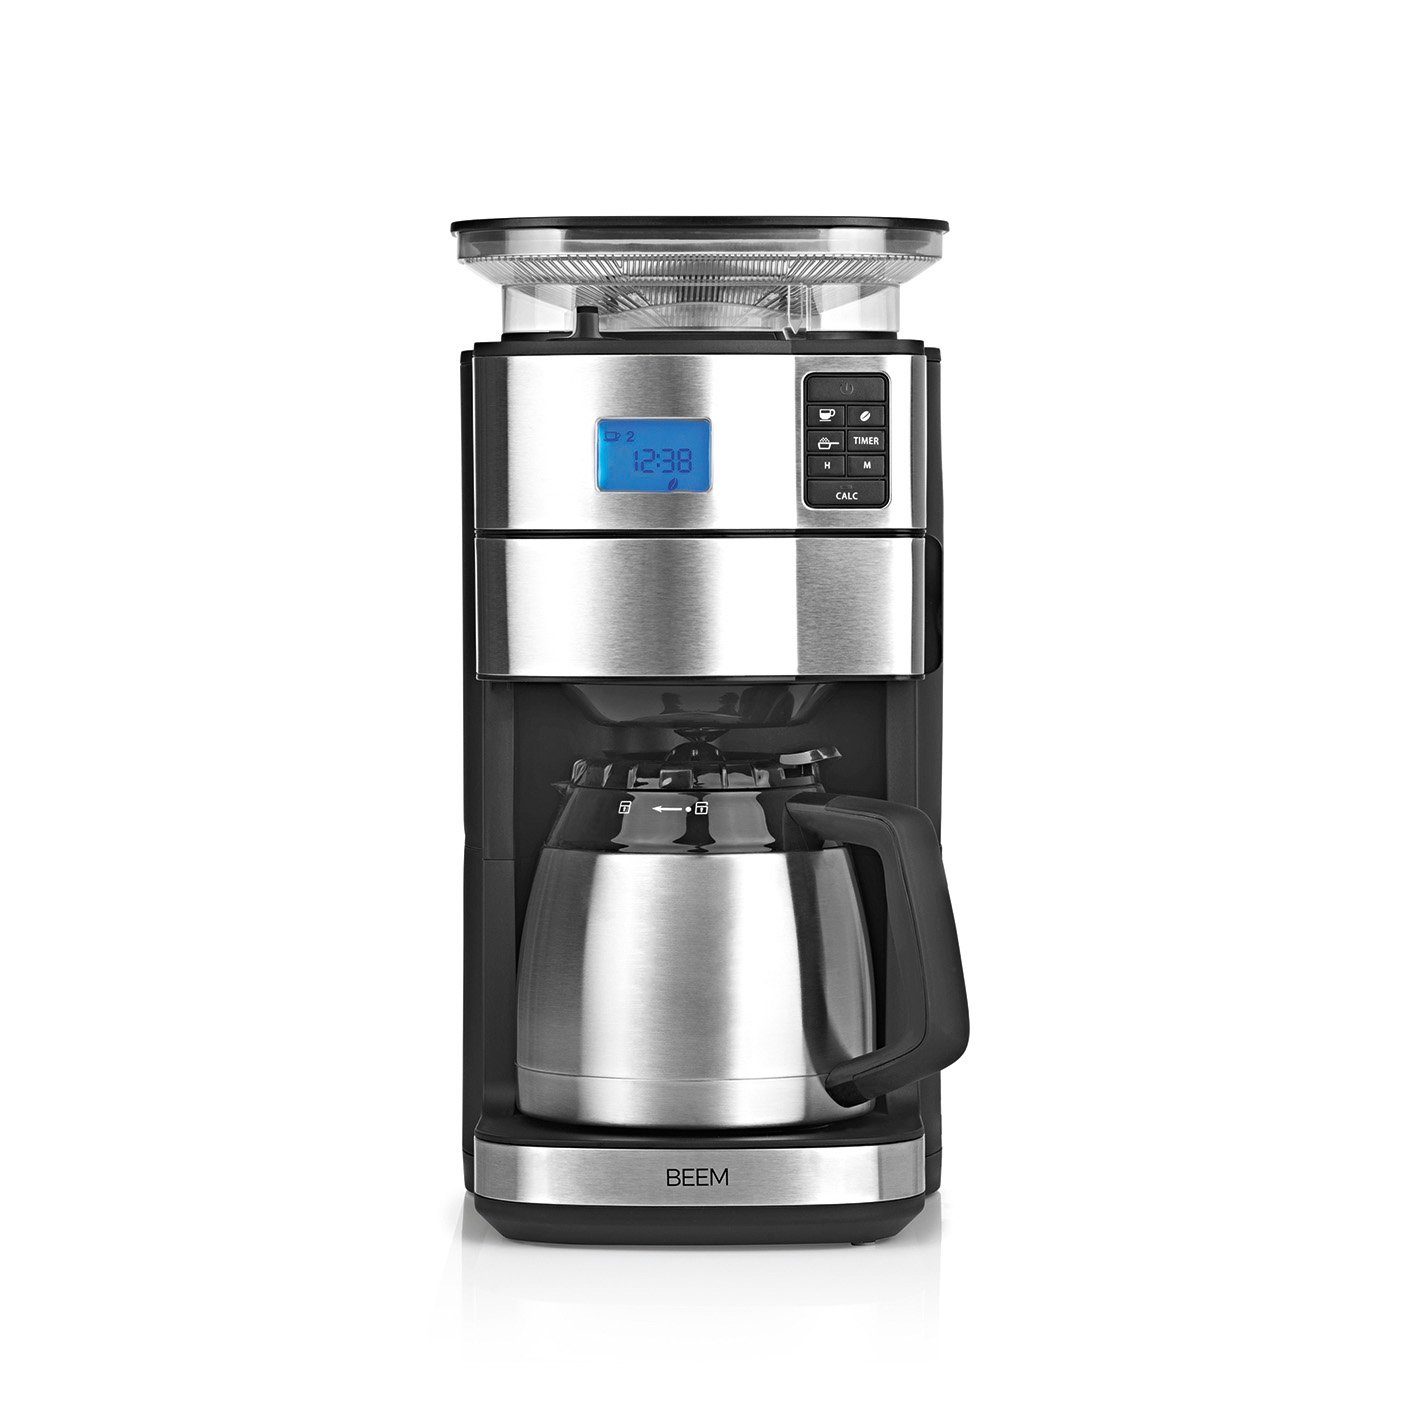 BEEM Filterkaffeemaschine, 1.25l Kaffeekanne, Permanentfilter, Korbfiltertüten, Thermokanne und 24h Timer Kegelmahlwerk | Filterkaffeemaschinen